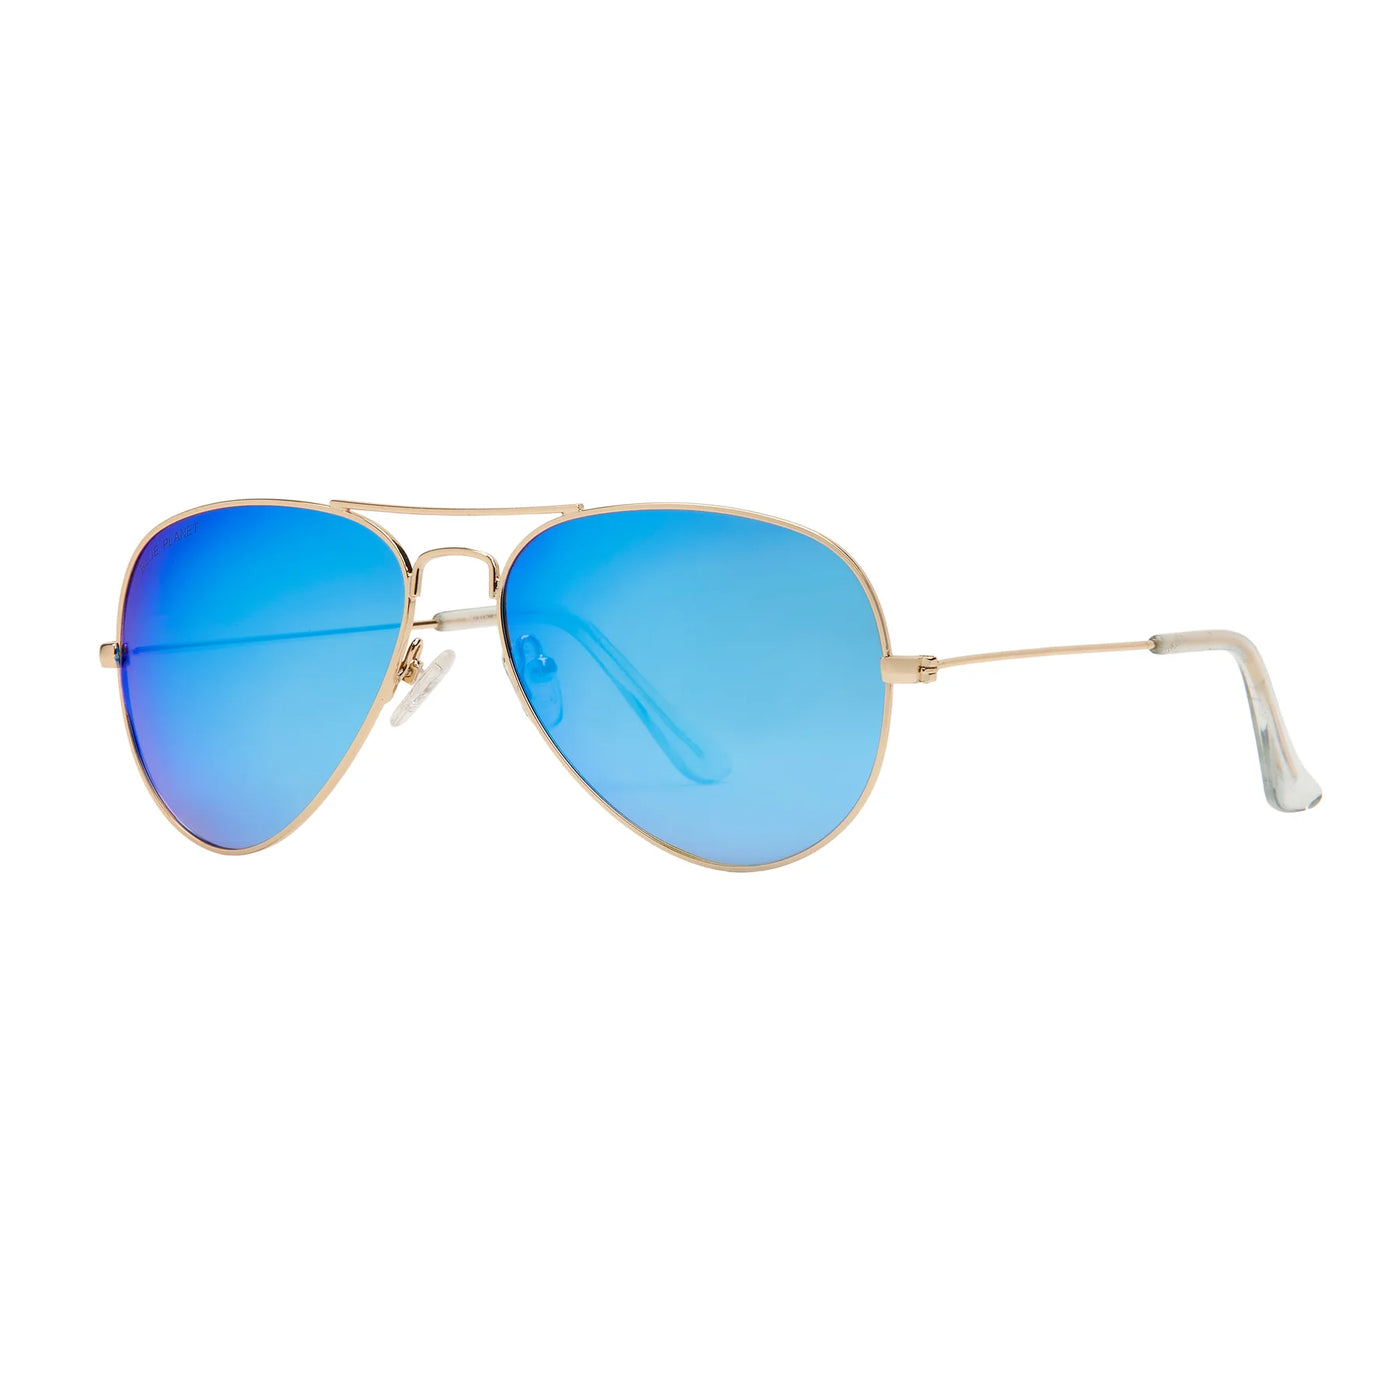 Wright Polarized Sunglasses